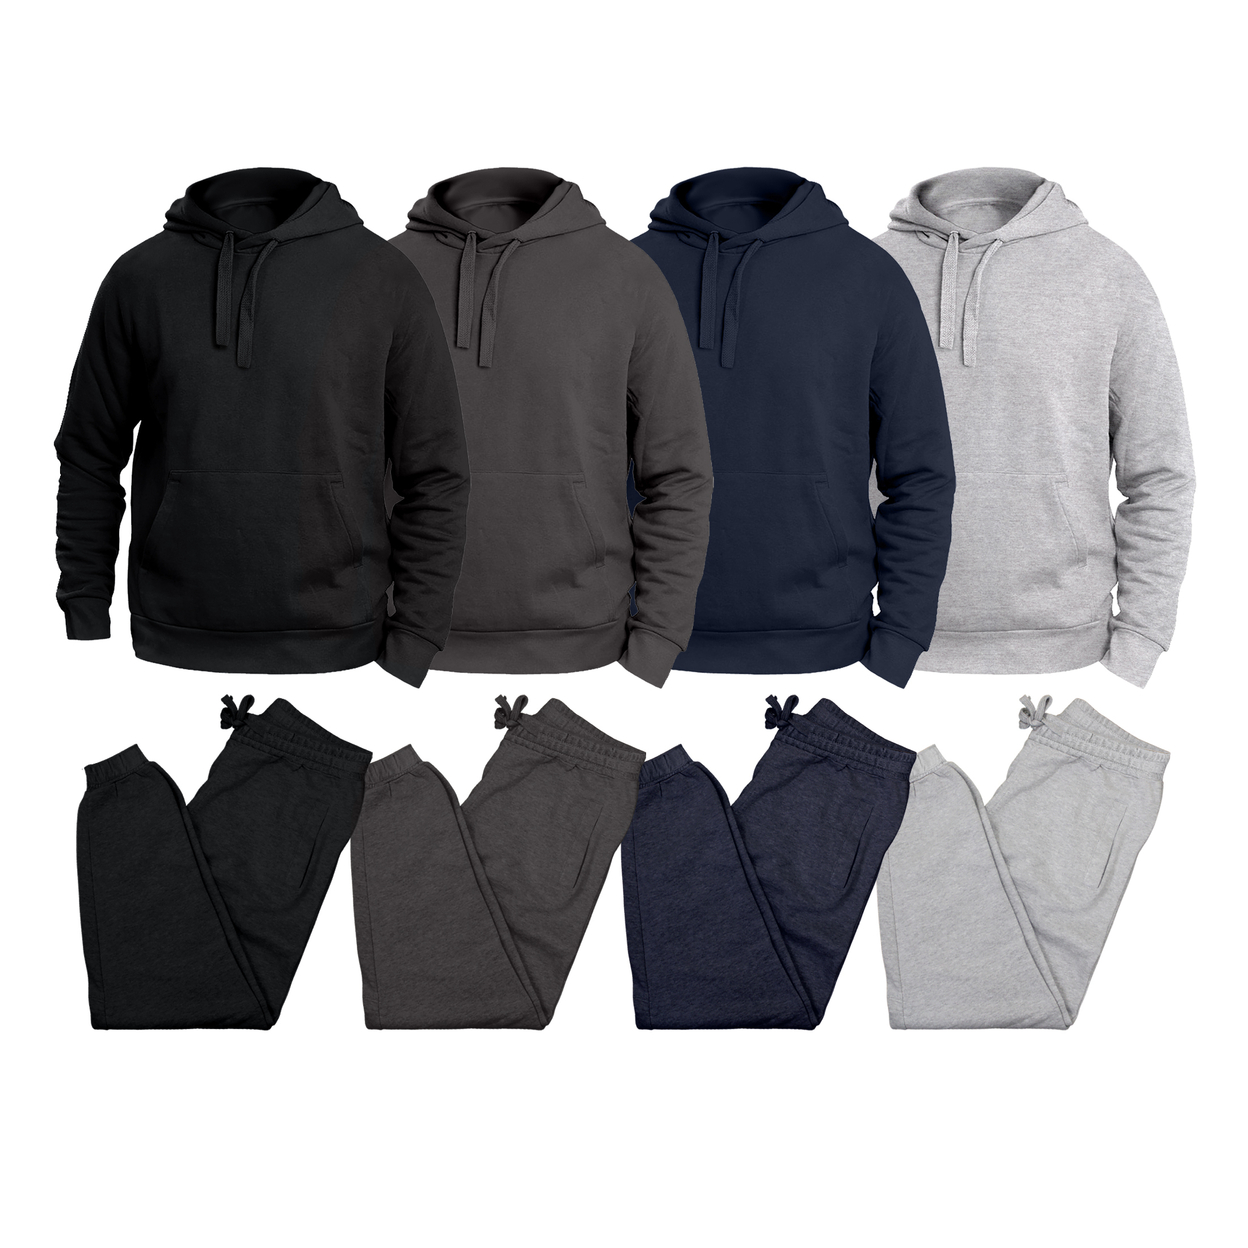 Multi-Pack: Big & Tall Men's Winter Warm Cozy Athletic Fleece Lined Multi-Pocket Cargo Sweatsuit - Black, 2-pack, Xx-large